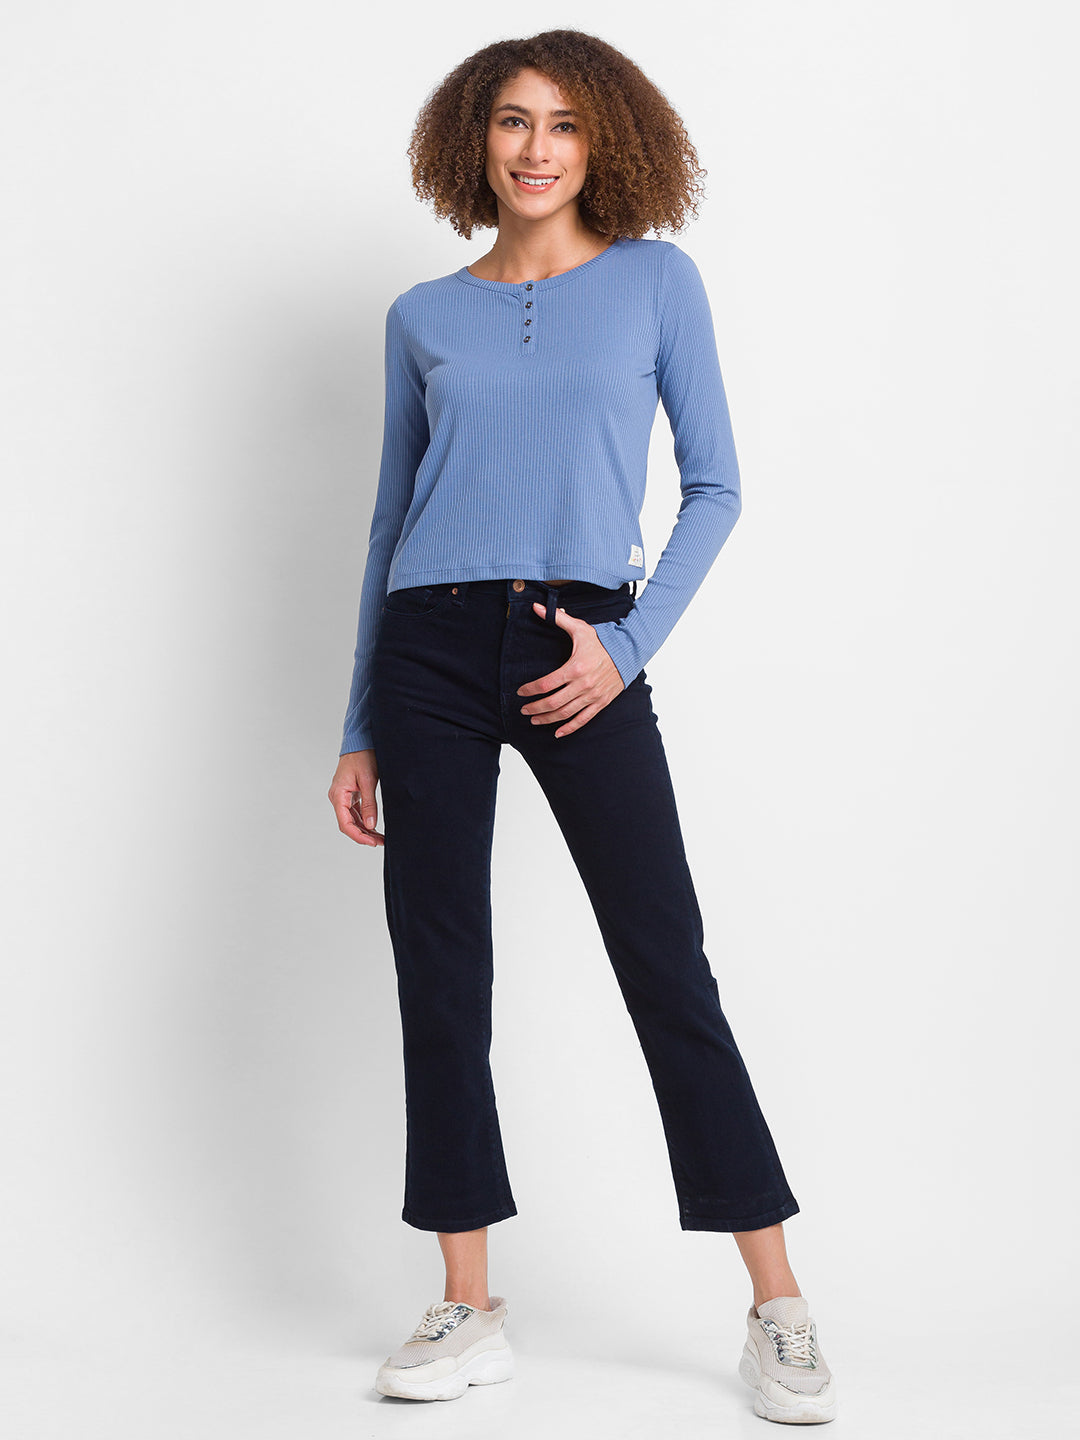 Spykar Dark Blue Lycra Slim Straight Fit Ankle Length Jeans For Women (Emma)